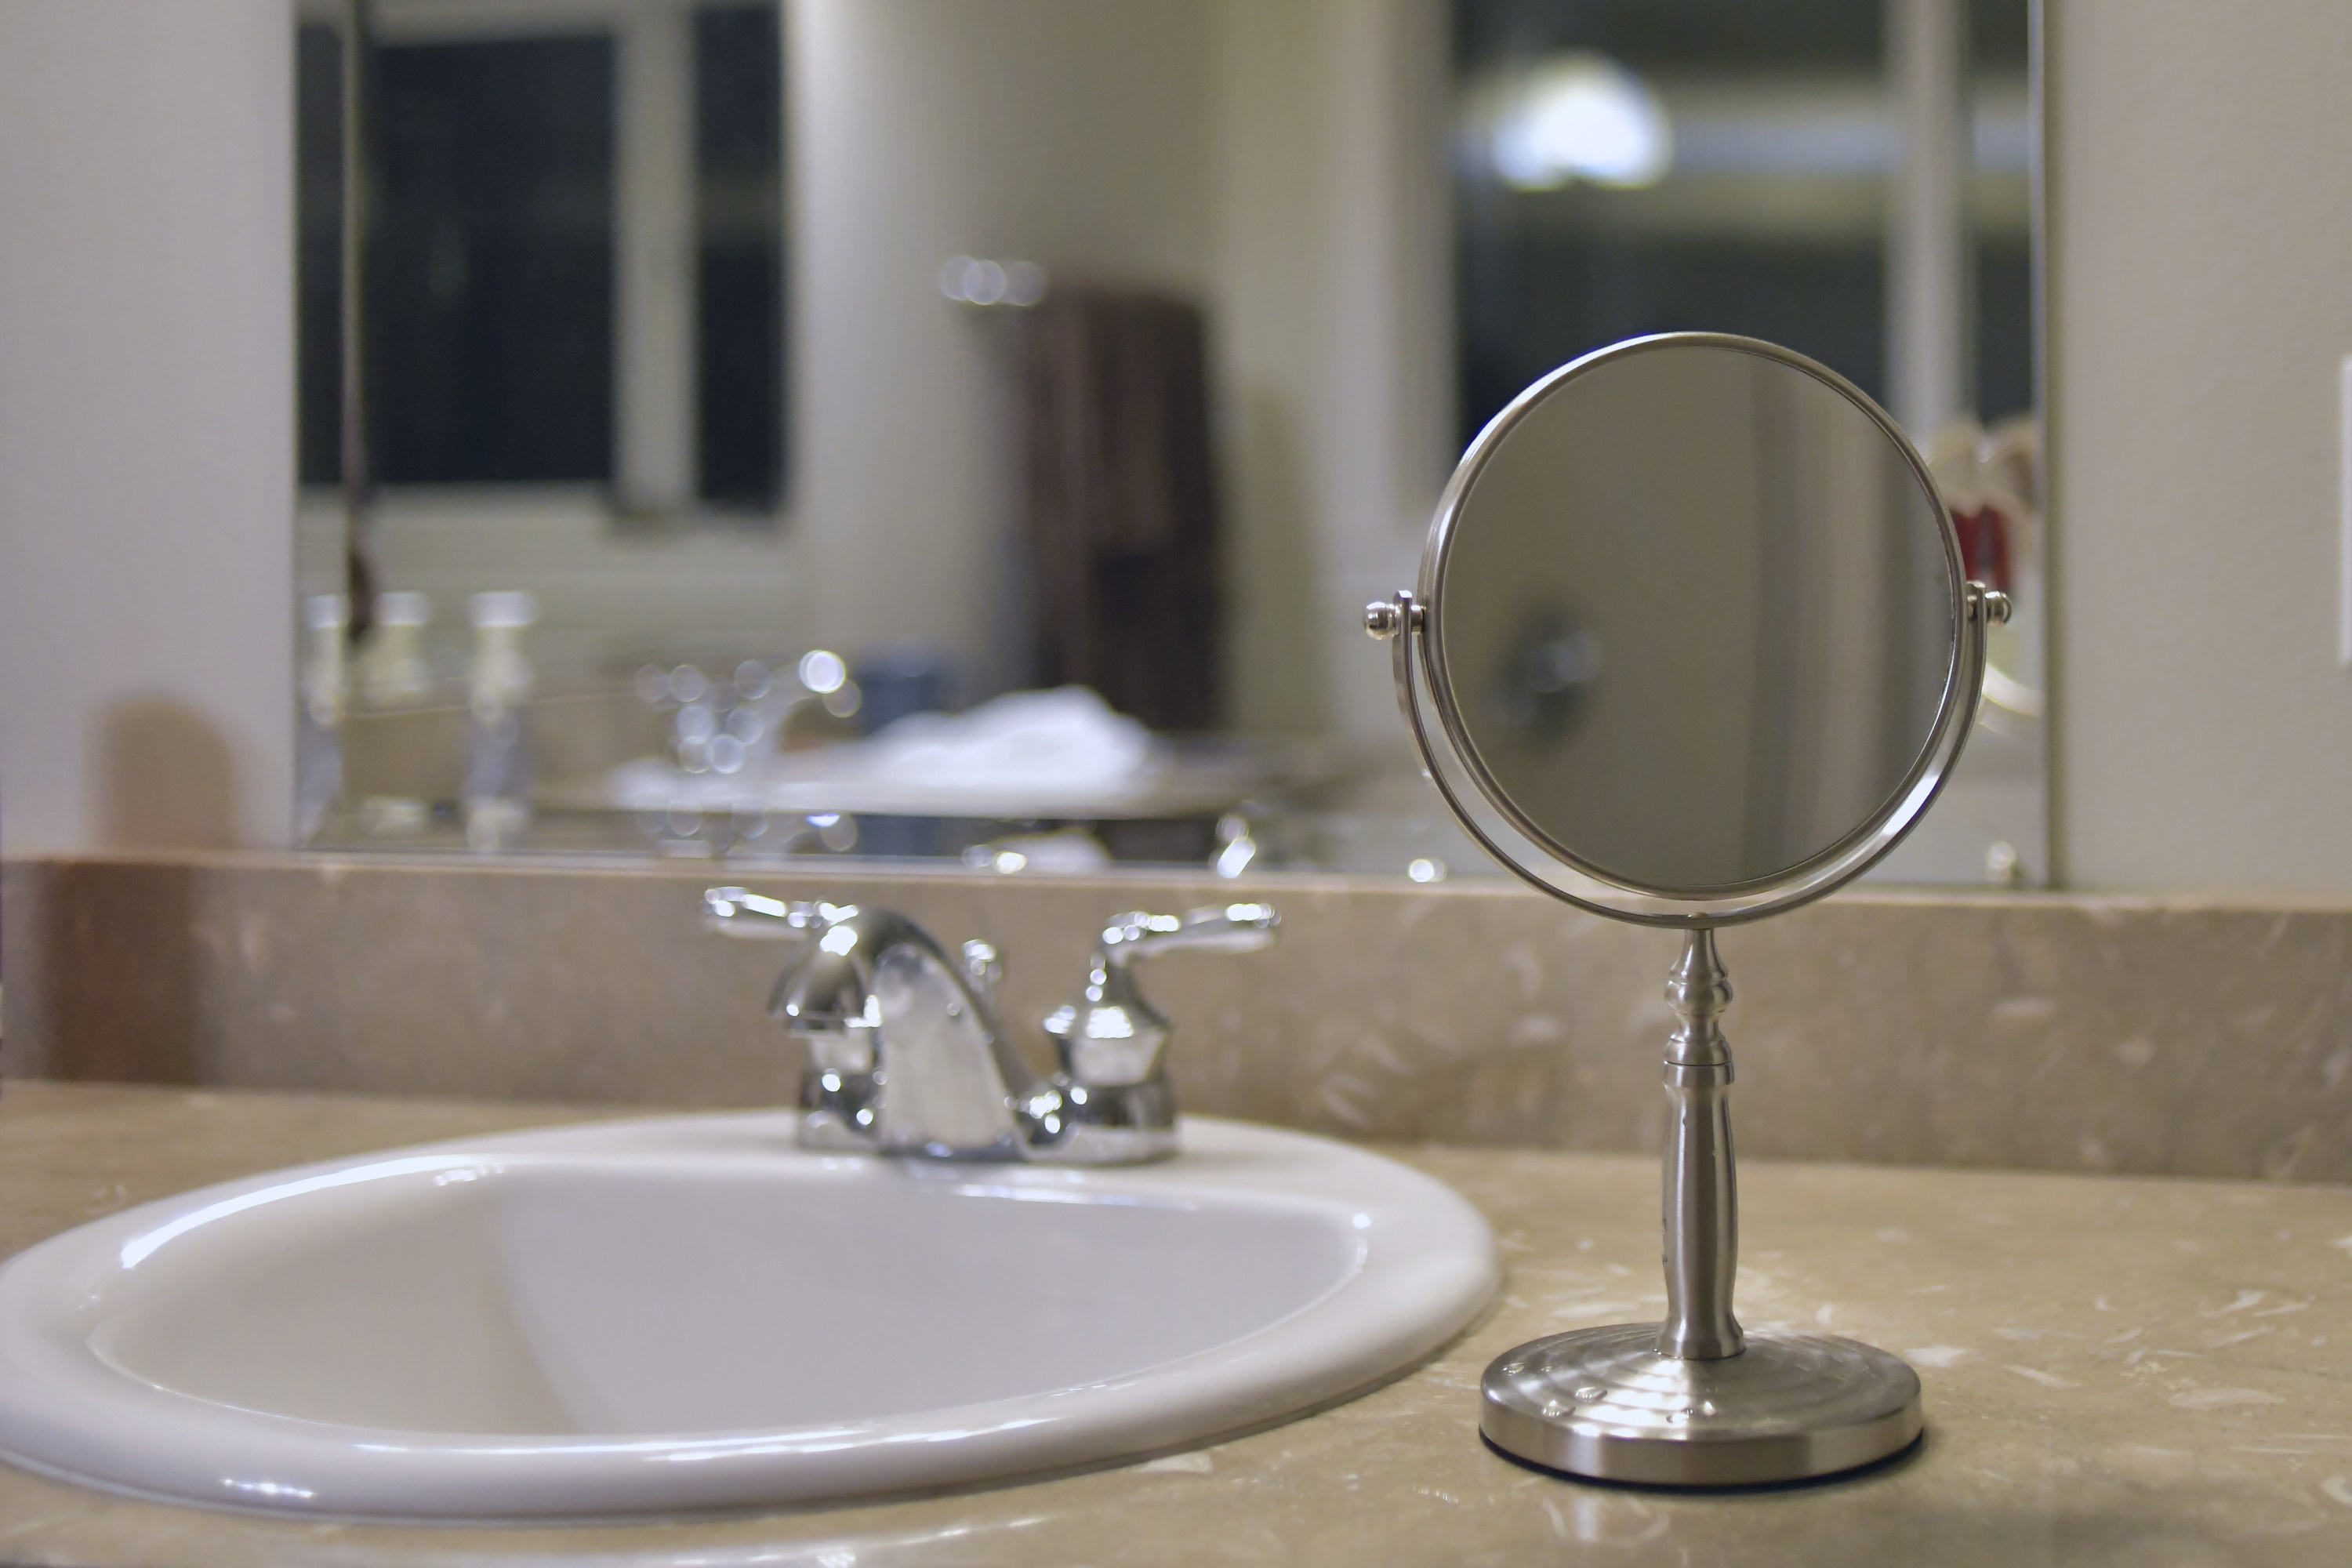 A bathroom sink with a mirror on it